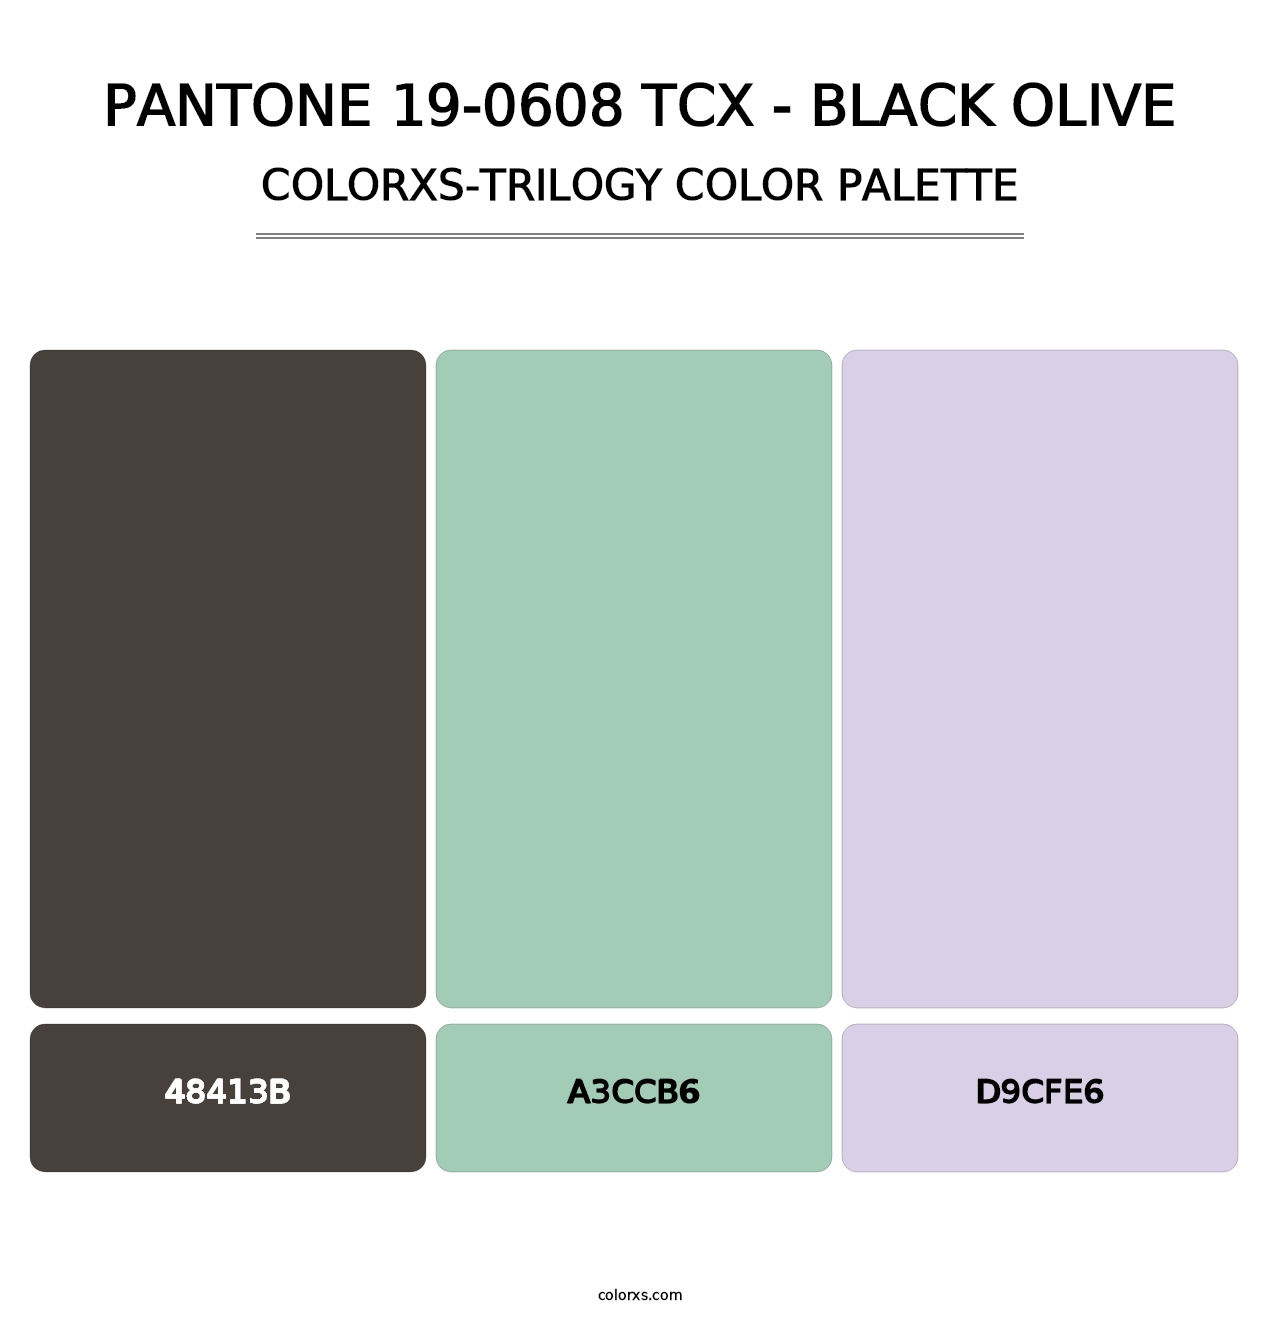 PANTONE 19-0608 TCX - Black Olive - Colorxs Trilogy Palette